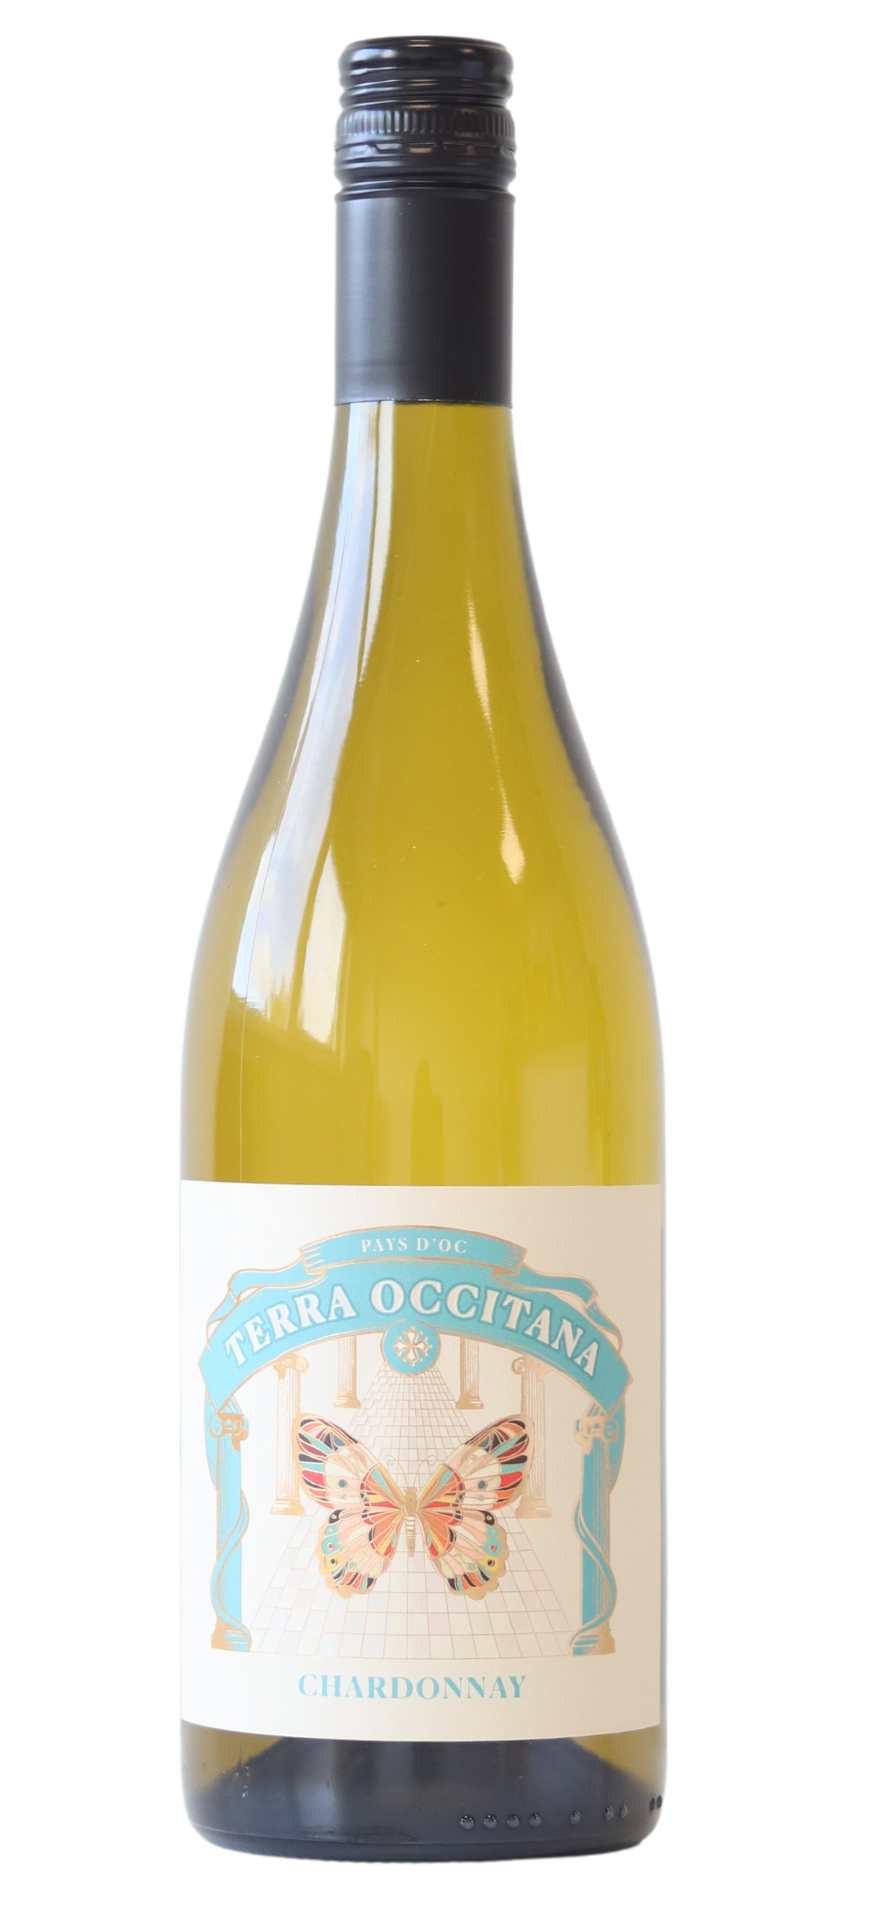 Jacques Charlet Terra Occitana Chardonnay, Pays d'Oc